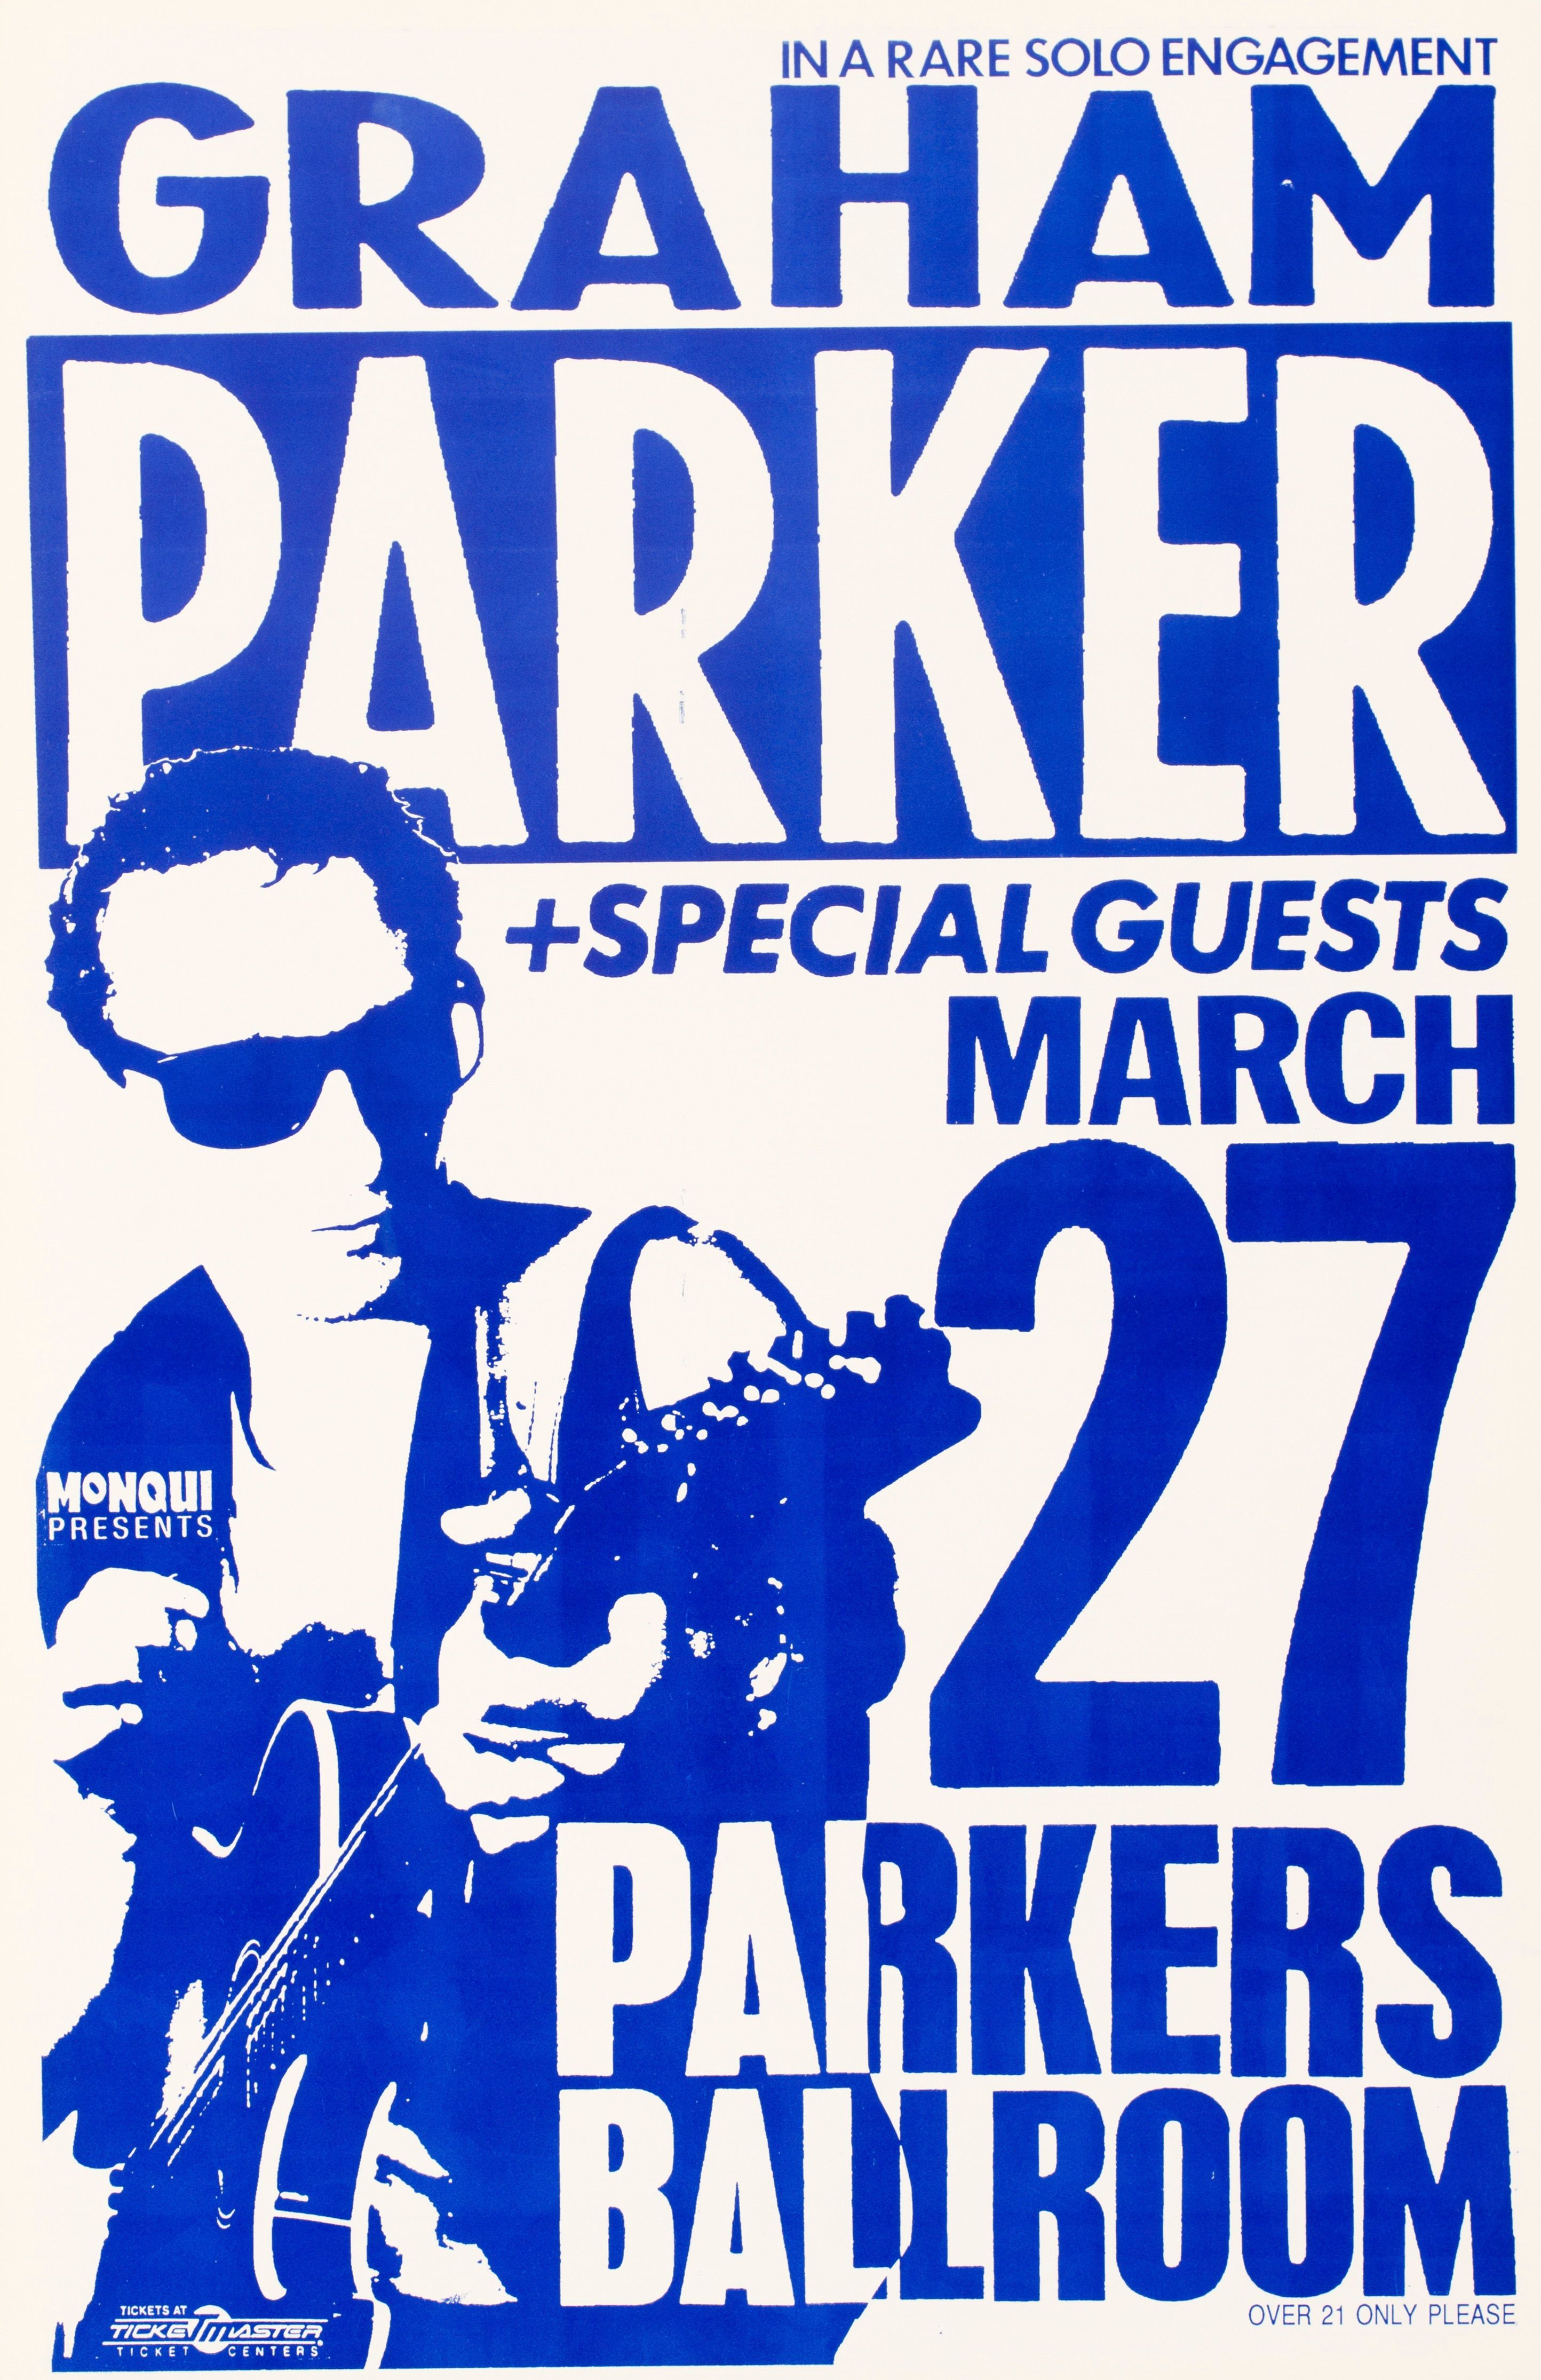 MXP-195.4 Graham Parker 1989 Parkers Ballroom  Mar 27 Concert Poster